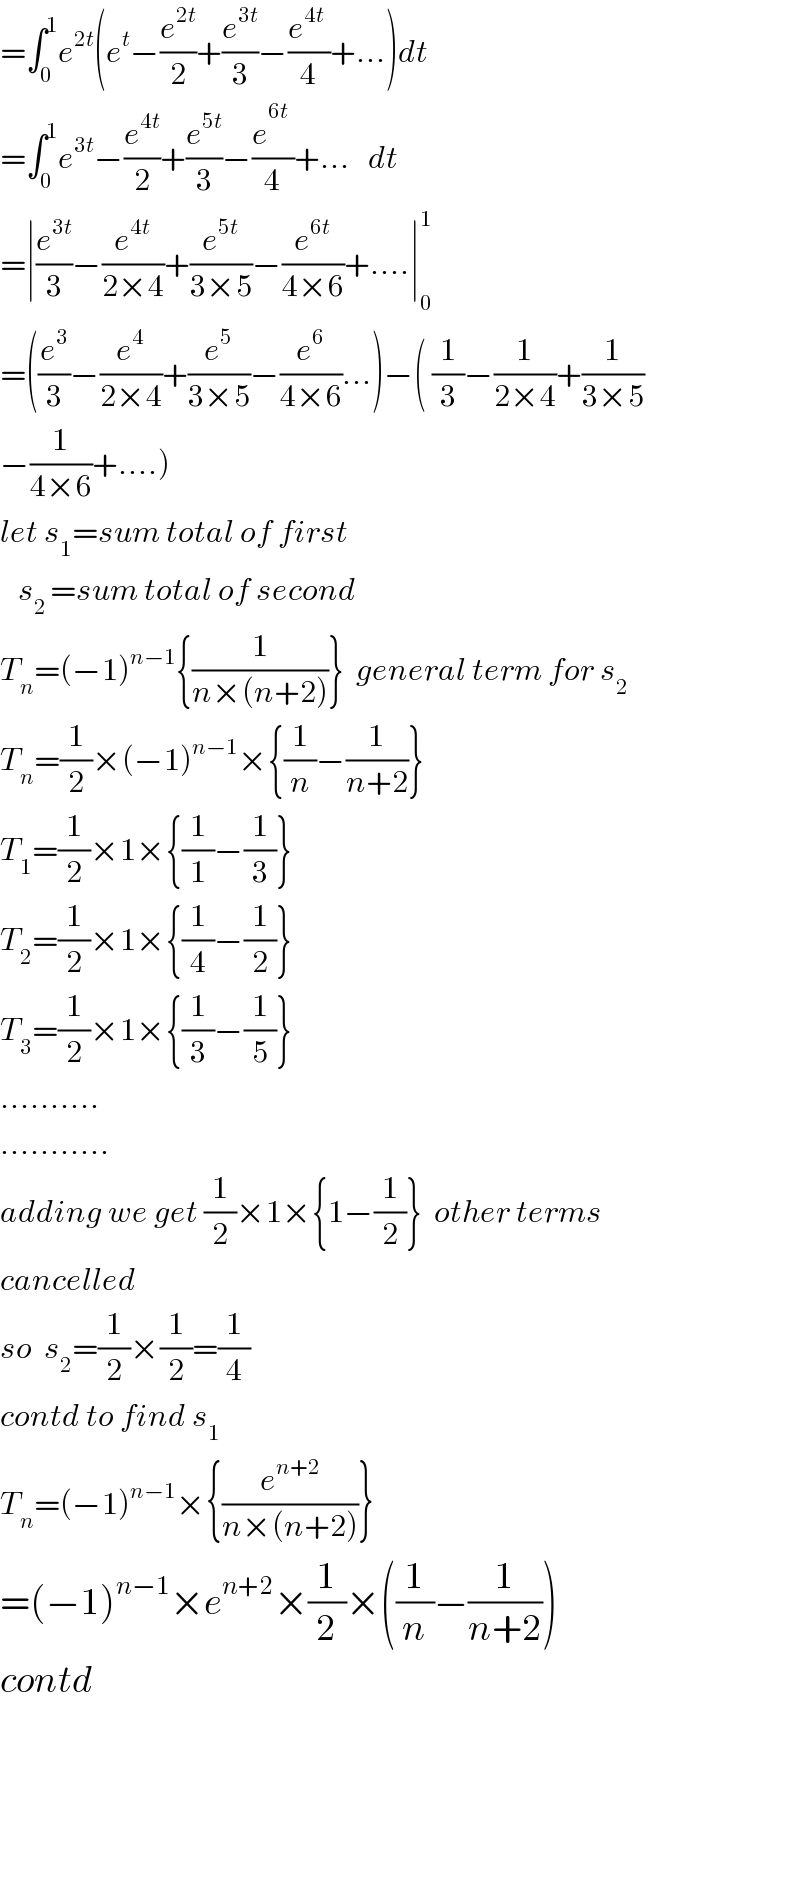 =∫_0 ^1 e^(2t) (e^t −(e^(2t) /2)+(e^(3t) /3)−((e^(4t)  )/4)+...)dt  =∫_0 ^1 e^(3t) −(e^(4t) /2)+(e^(5t) /3)−(e^(6t_ ) /4)+...   dt  =∣(e^(3t) /3)−(e^(4t) /(2×4))+(e^(5t) /(3×5))−(e^(6t) /(4×6))+....∣_0 ^1   =((e^3 /3)−(e^4 /(2×4))+(e^5 /(3×5))−(e^6 /(4×6))...)−( (1/3)−(1/(2×4))+(1/(3×5))  −(1/(4×6))+....)  let s_1 =sum total of first      s_(2 ) =sum total of second  T_n =(−1)^(n−1) {(1/(n×(n+2)))}  general term for s_2   T_n =(1/2)×(−1)^(n−1) ×{(1/n)−(1/(n+2))}  T_1 =(1/2)×1×{(1/1)−(1/3)}  T_2 =(1/2)×1×{(1/4)−(1/2)}  T_3 =(1/2)×1×{(1/3)−(1/5)}  ..........  ...........  adding we get (1/2)×1×{1−(1/2)}  other terms  cancelled  so  s_2 =(1/2)×(1/2)=(1/4)  contd to find s_1   T_n =(−1)^(n−1) ×{(e^(n+2) /(n×(n+2)))}  =(−1)^(n−1) ×e^(n+2) ×(1/2)×((1/n)−(1/(n+2)))  contd          